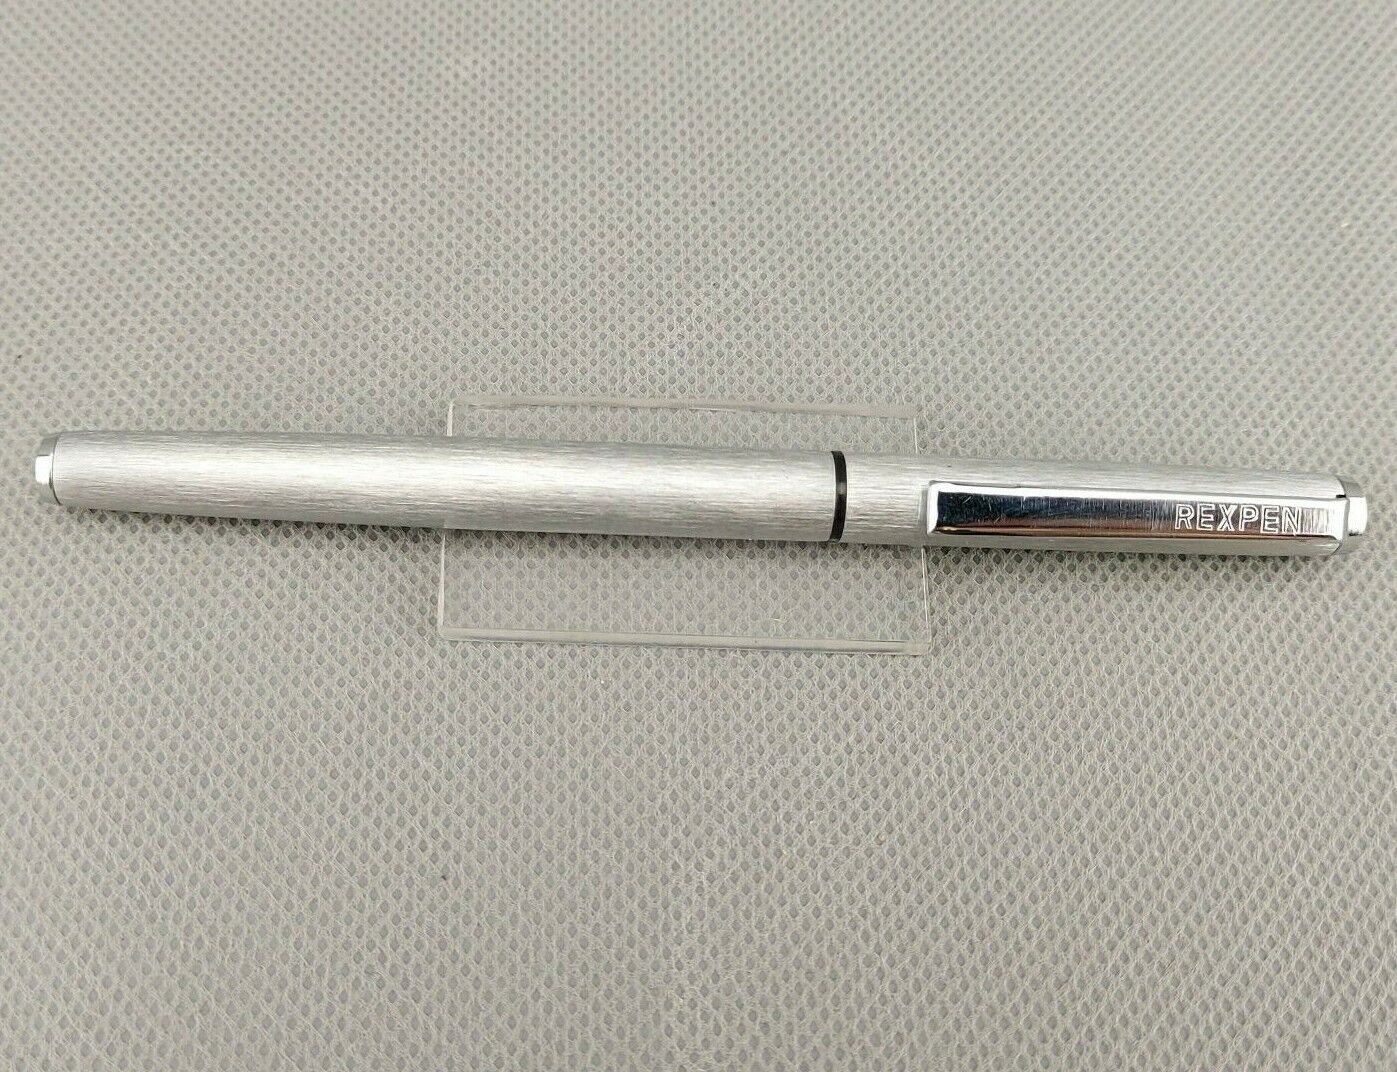 Vintage REXPEN Fountain Pen Brushed Metal Chrome Trim #2897